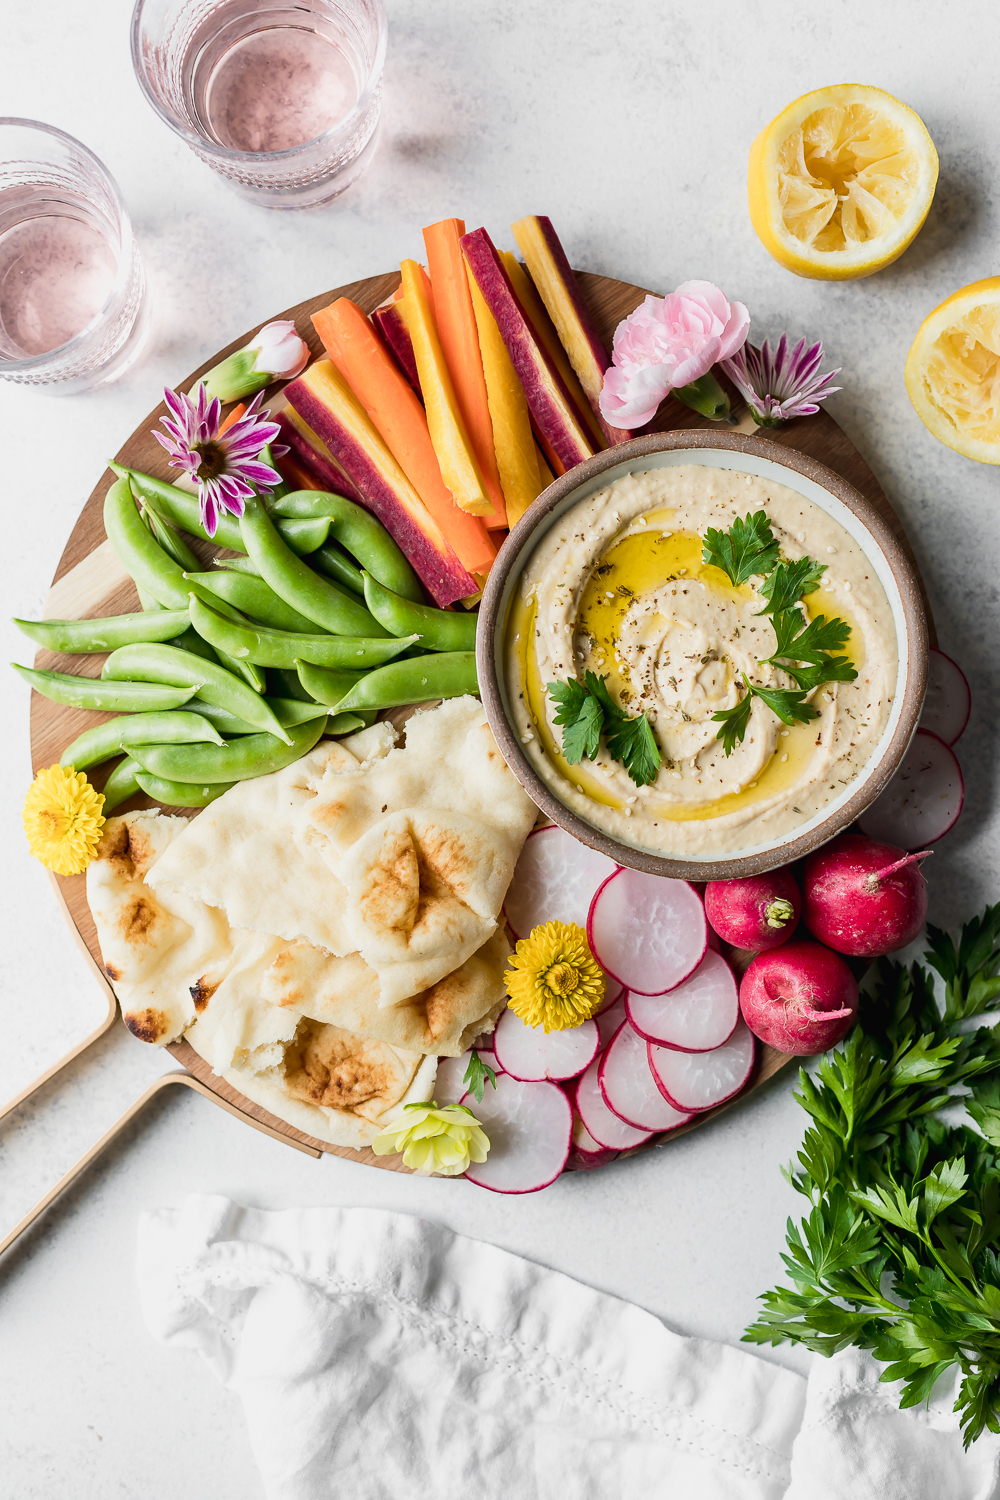 https://daniliciousdishes.com/wp-content/uploads/2020/04/Spring-Hummus-Platter-1.jpg